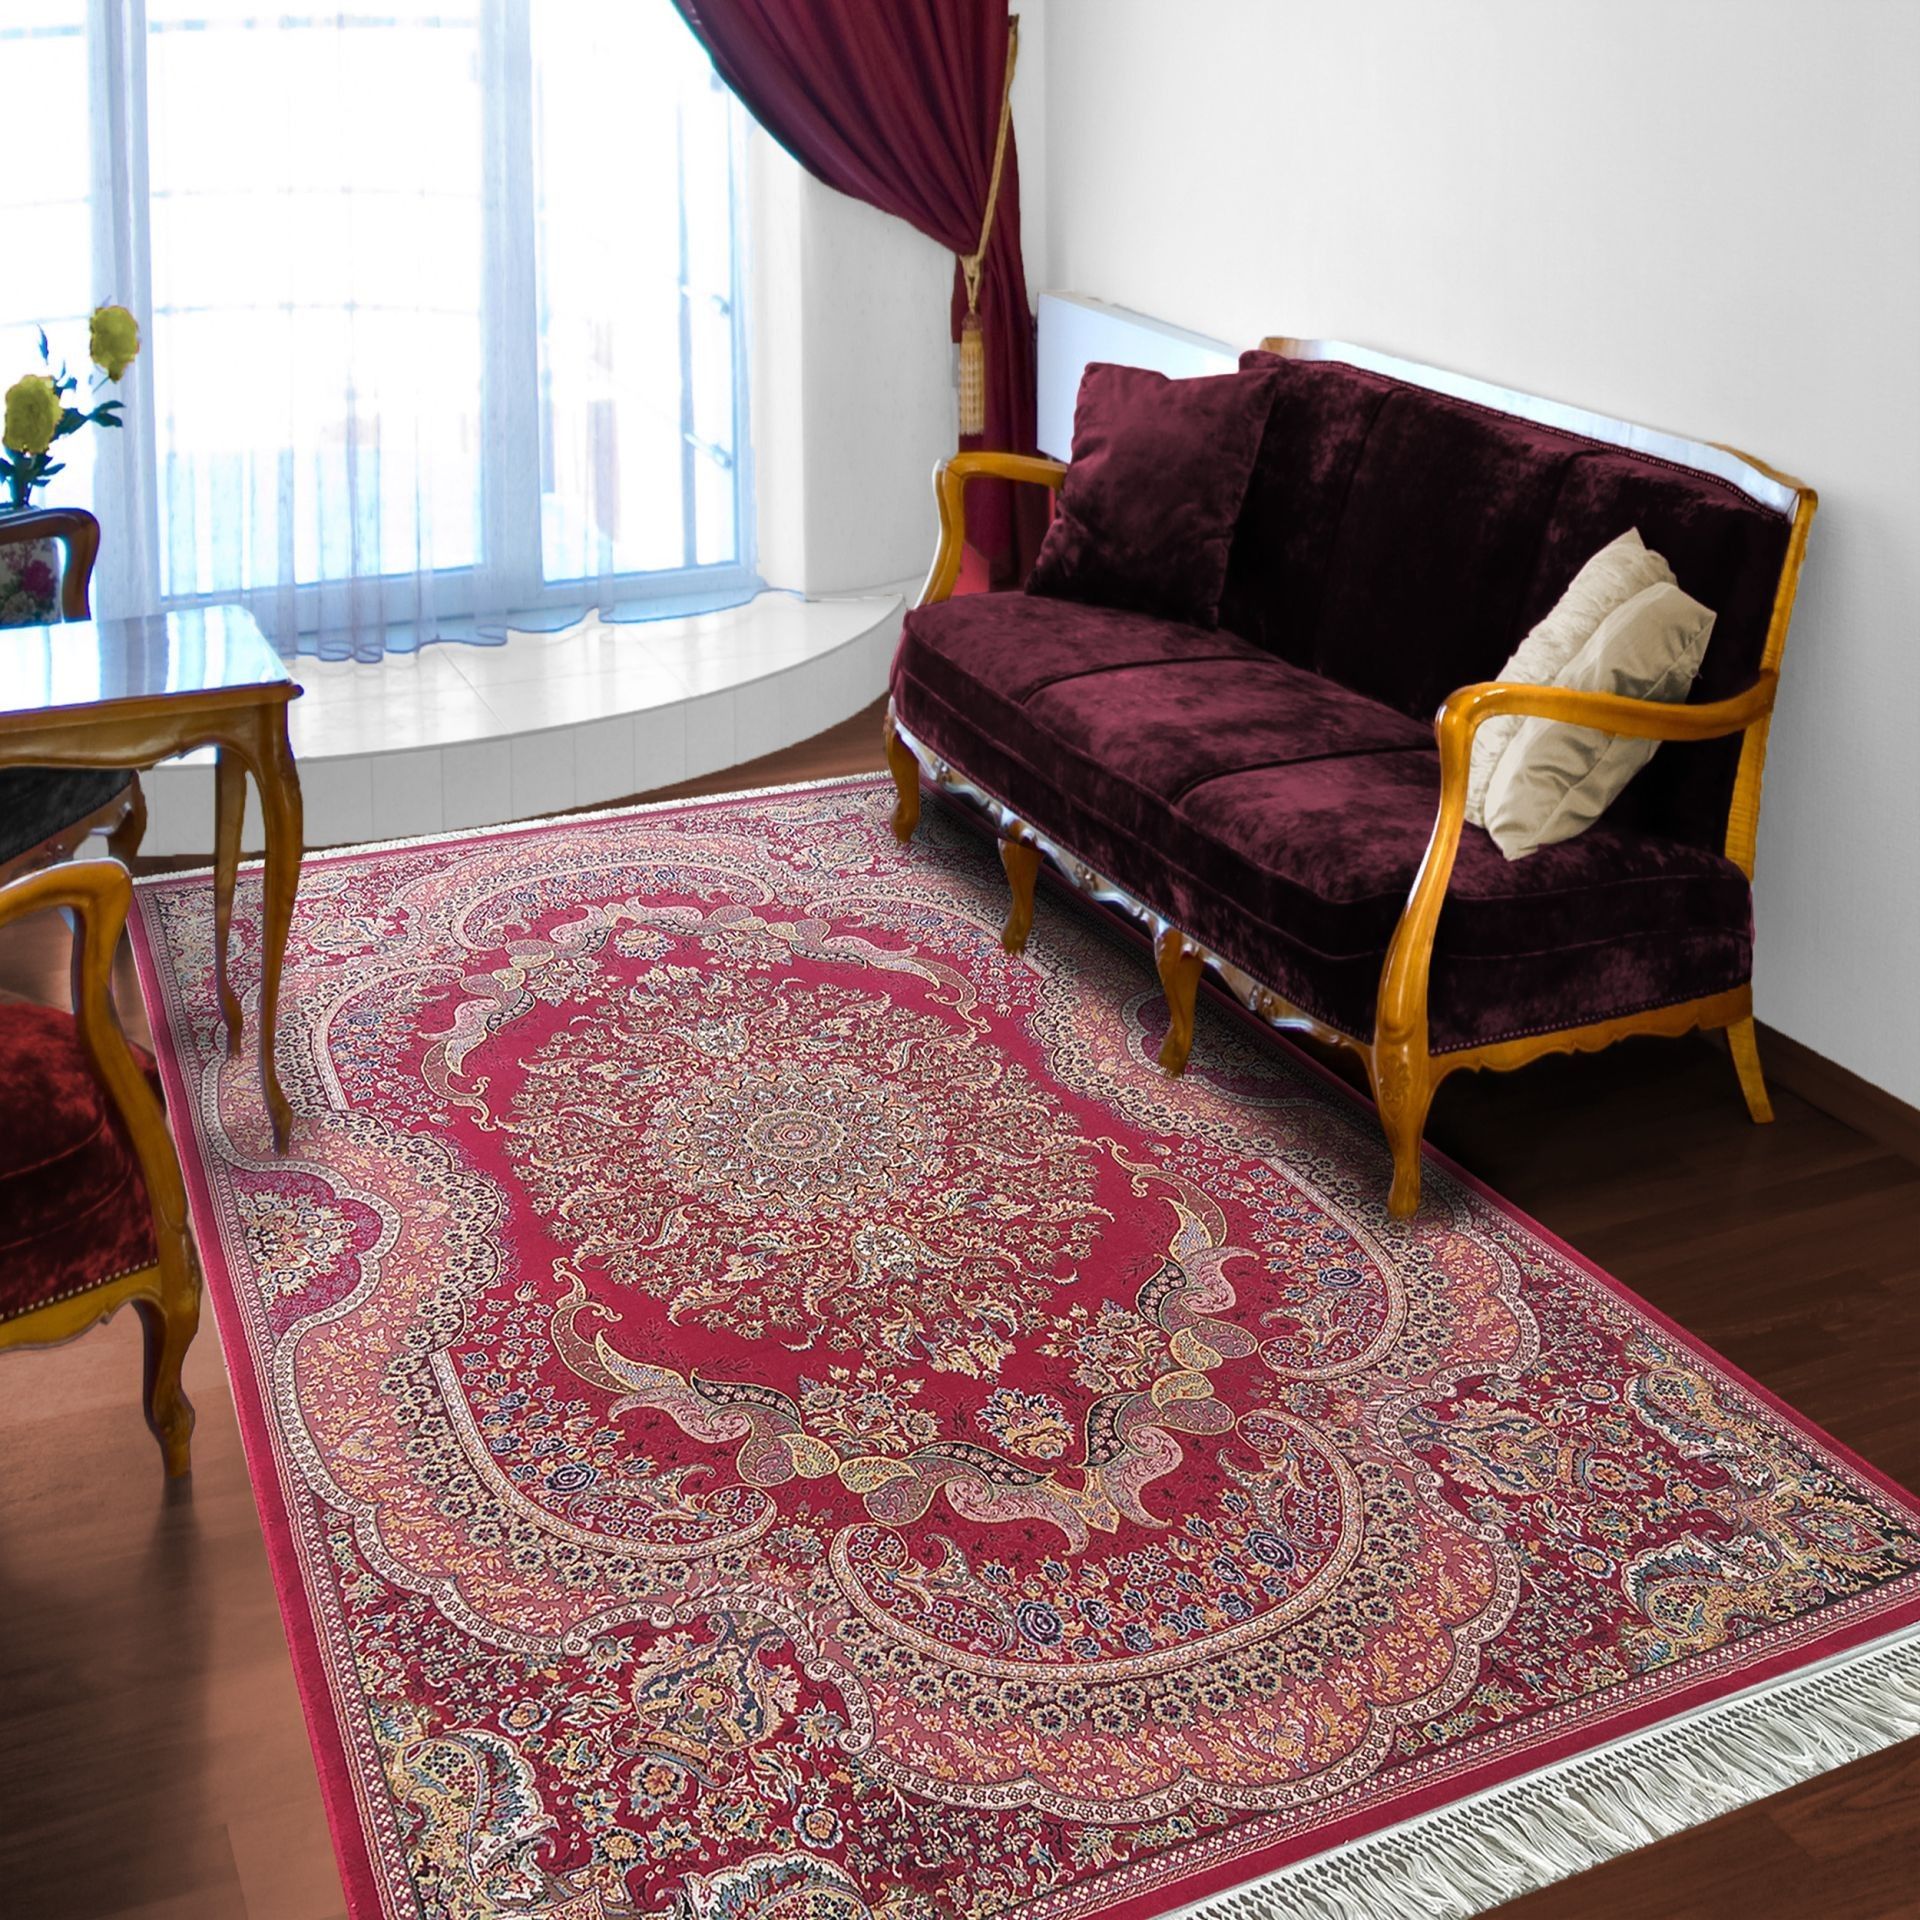 DomTextilu Exkluzívny červený koberec s krásnym vzorom 67156-241862